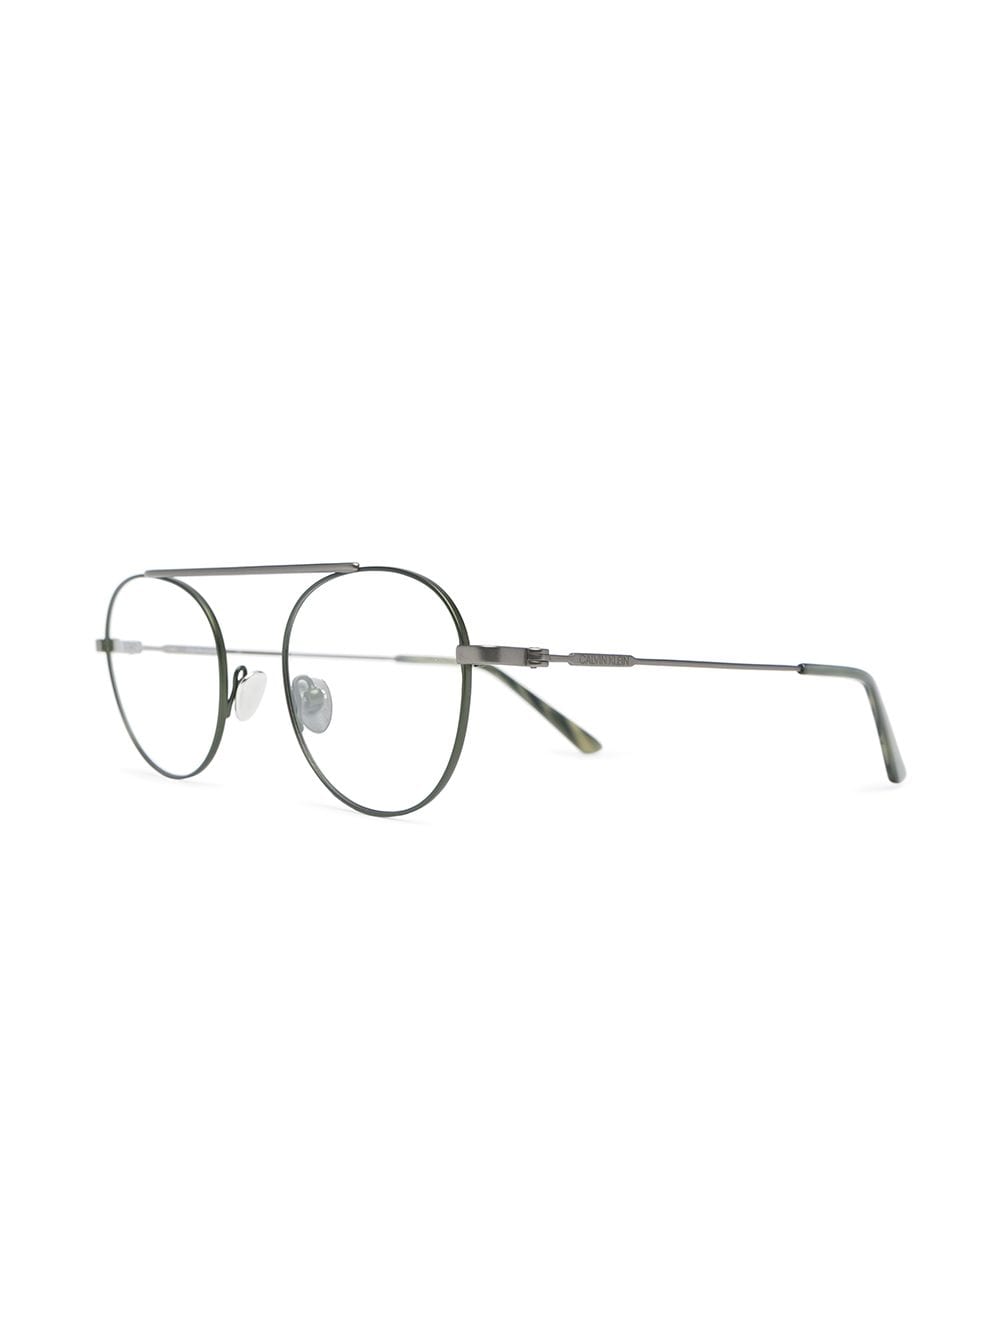 Calvin Klein CK19151 bril met rond montuur - Groen